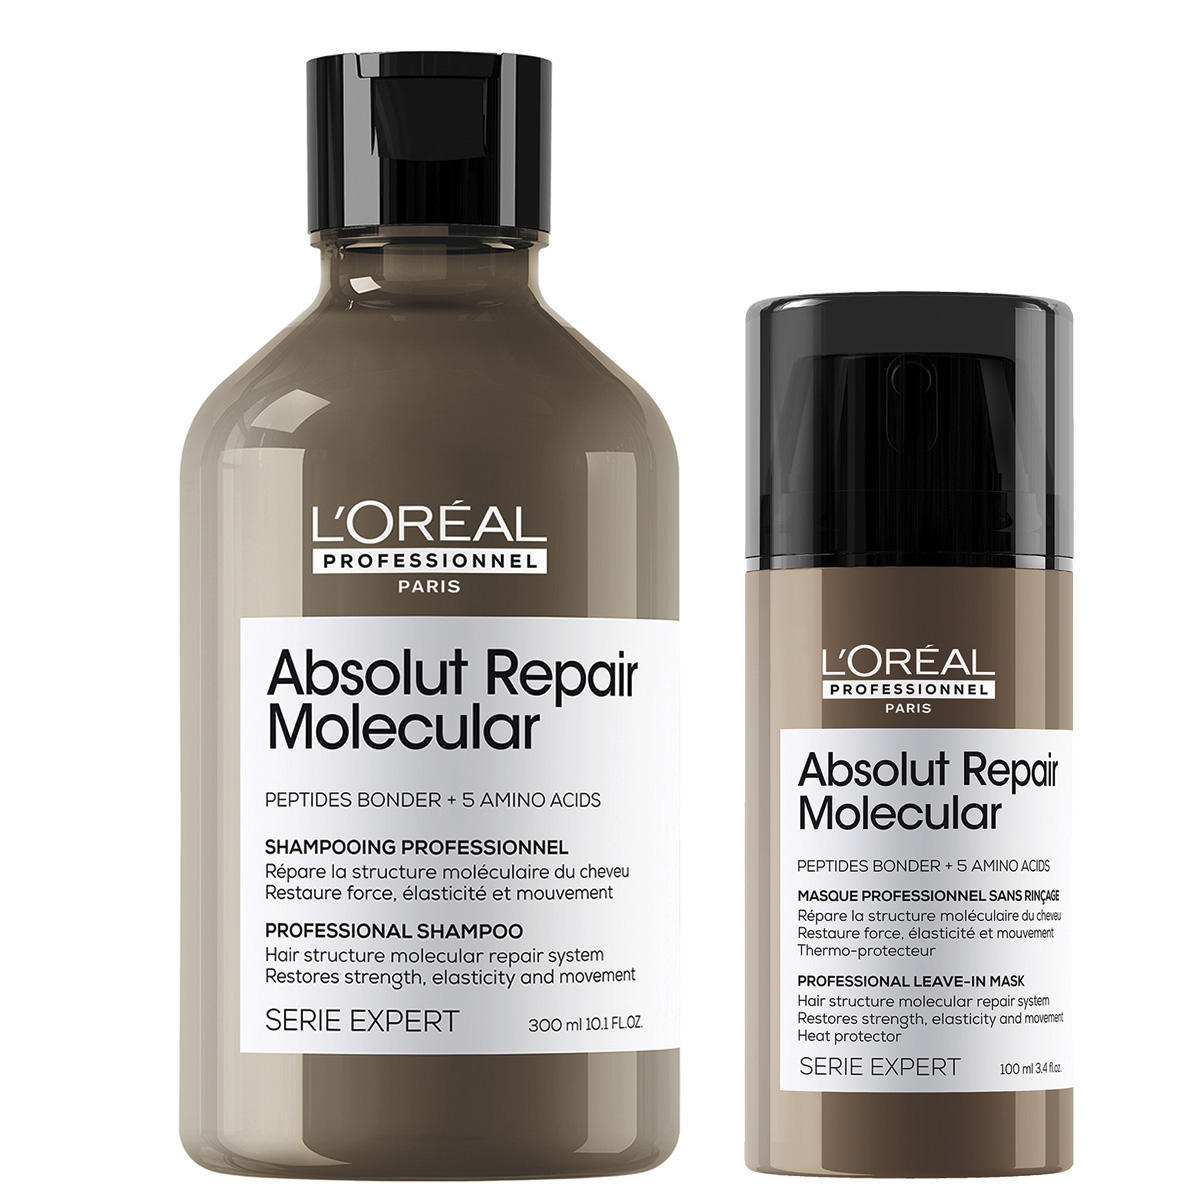 l'oréal professionnel paris serie expert absolut repair molecular set 2 shampoo + leave in mask